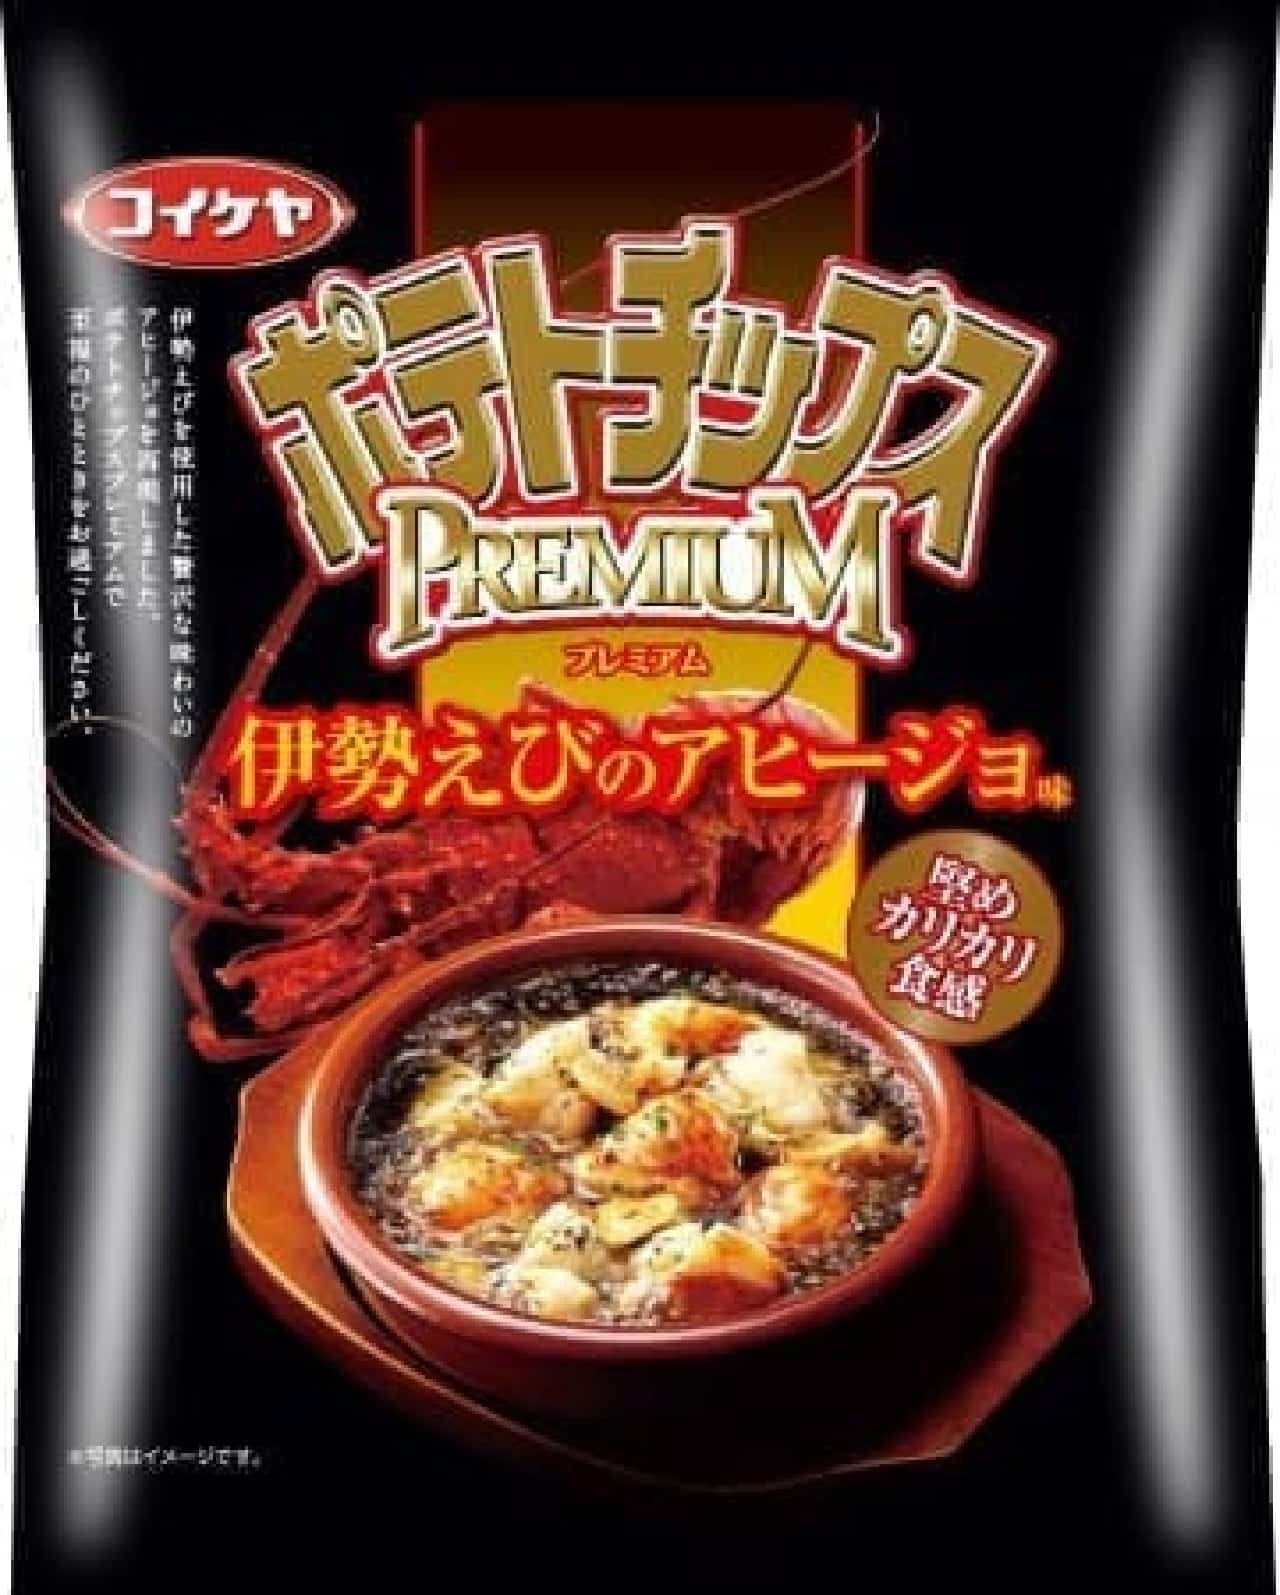 "Potato Chips Premium Ise Shrimp Ahijo Flavor"